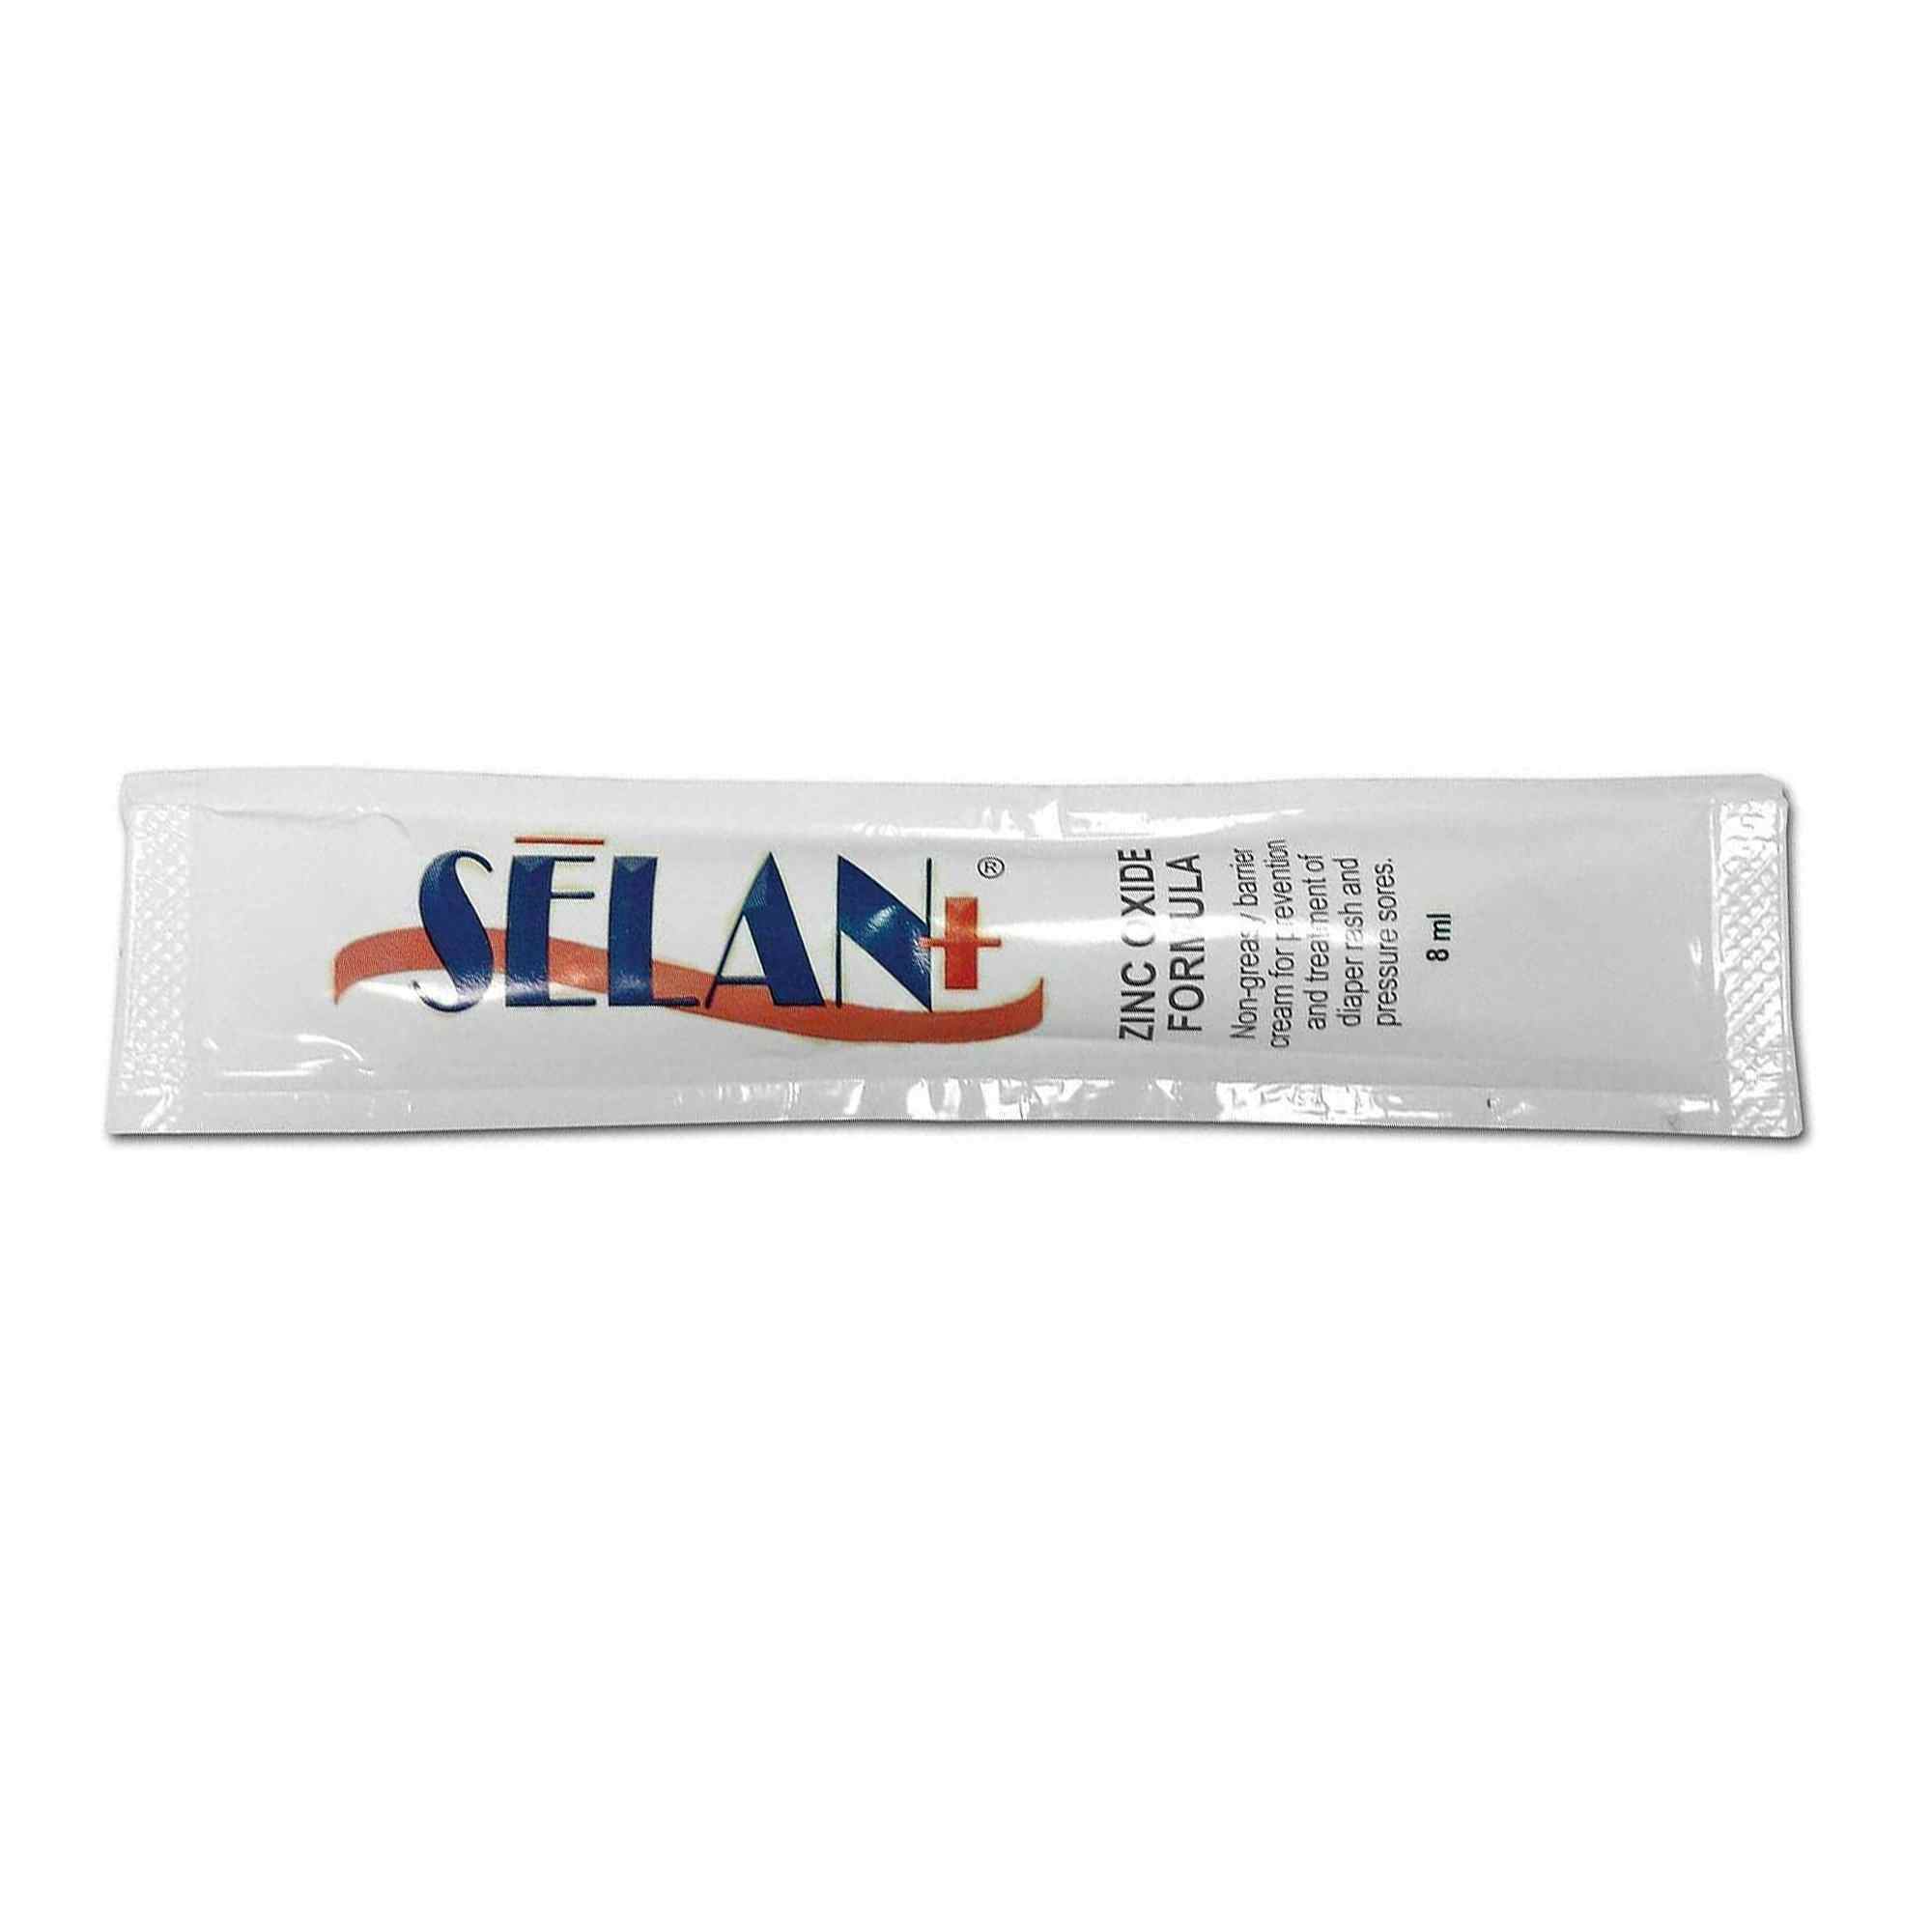 Selan+ Zinc Oxide Barrier Cream and Lotion, PJSZC08144, Case of 144